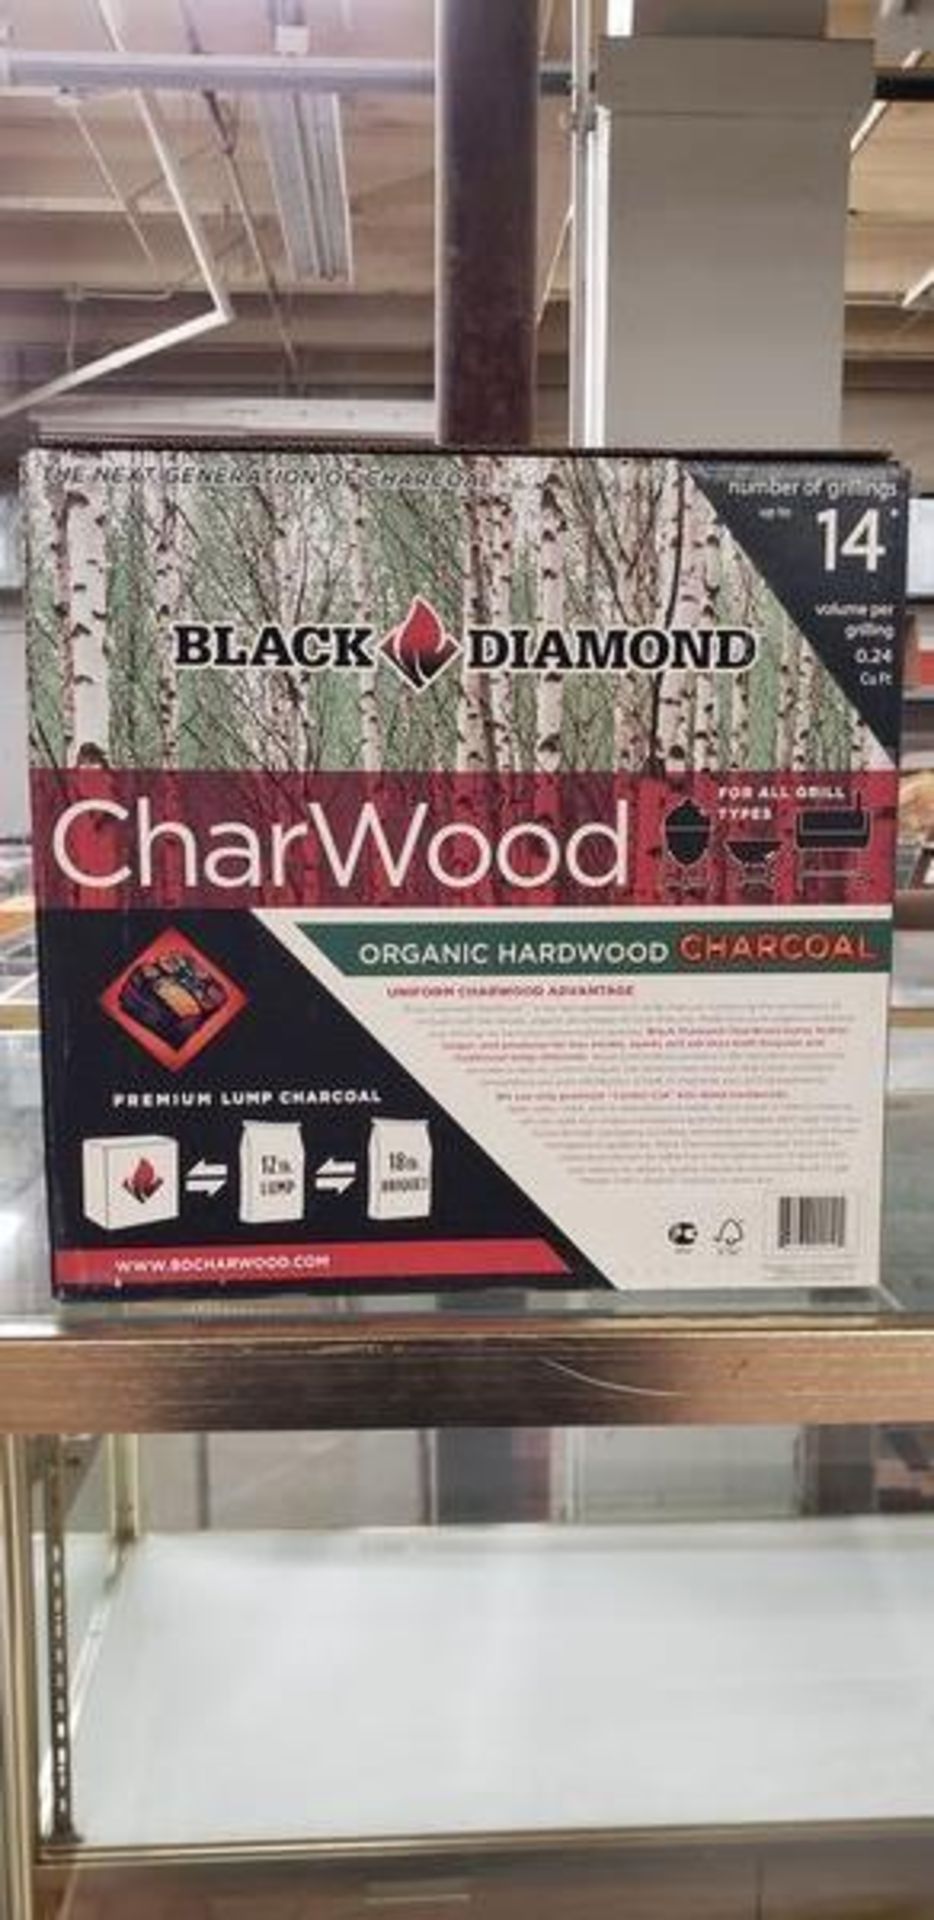 10 BOXES OF BLACK DIAMOND CHARWOOD LUMP CHARCOAL - 14 GRILLS PER BOX